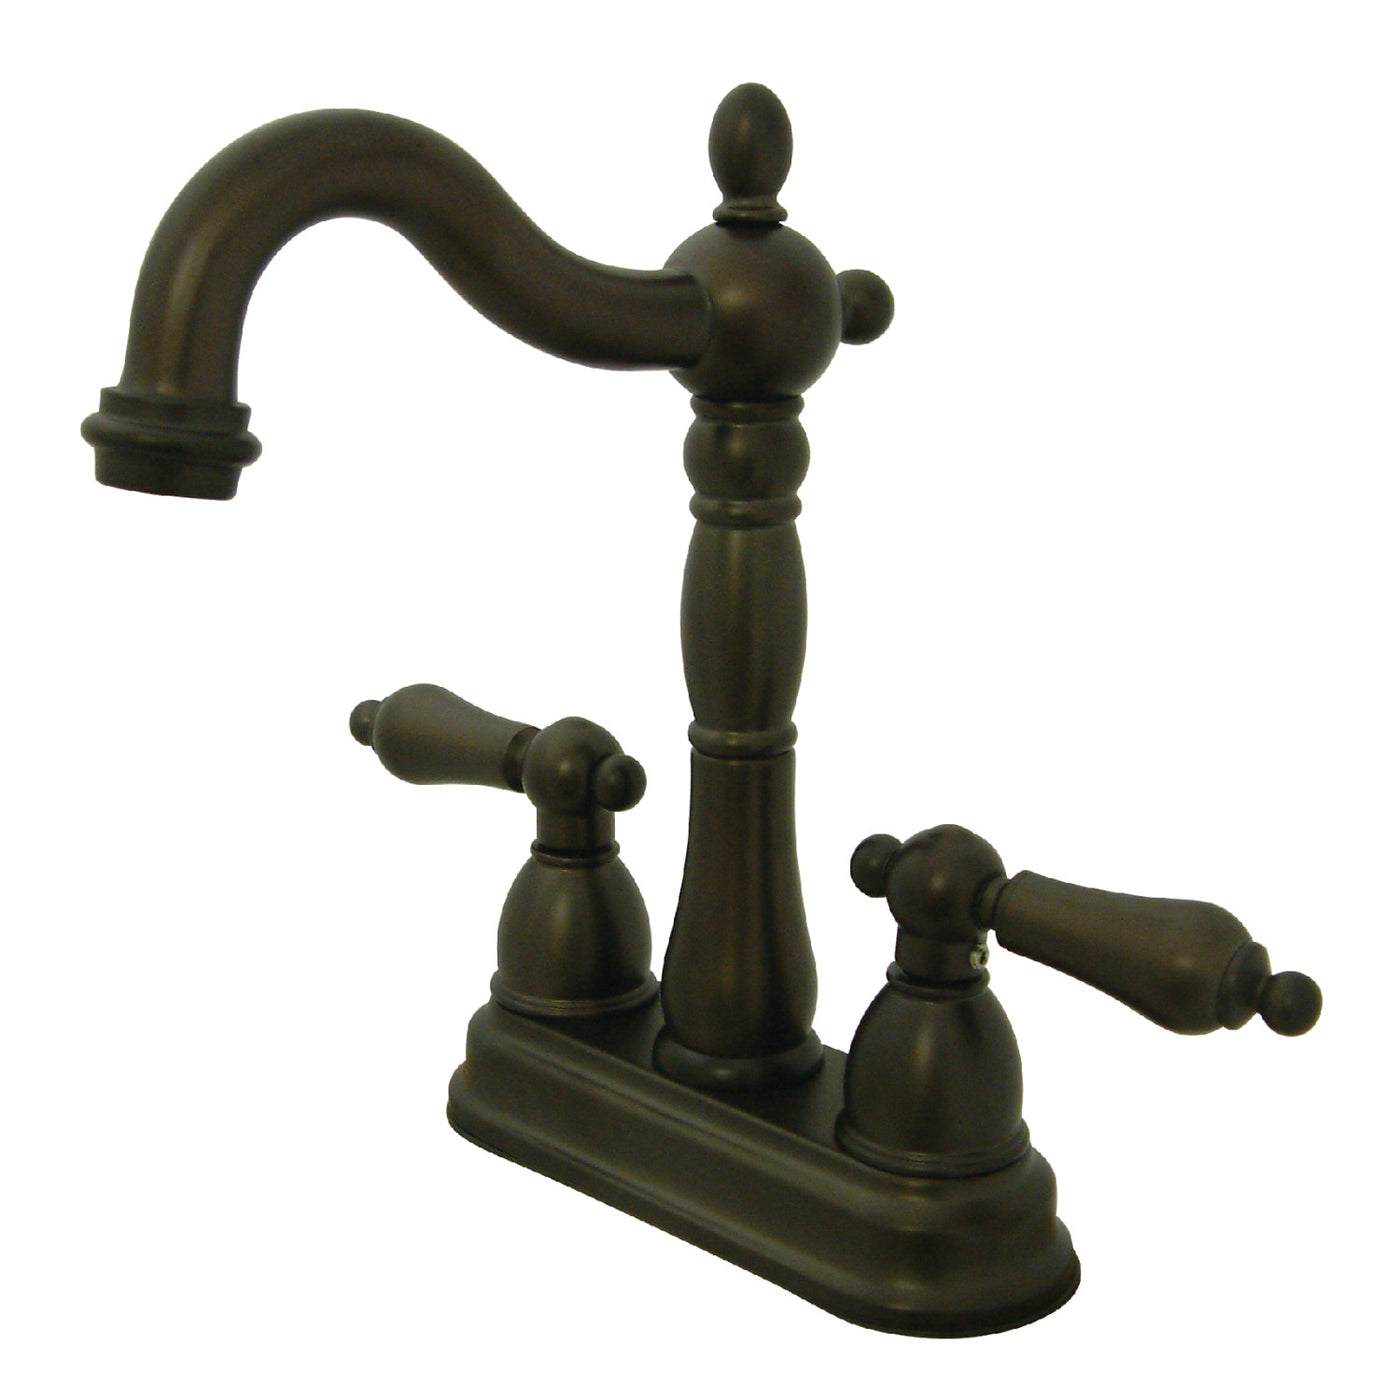 Elements of Design EB1495AL 4-Inch Centerset Bar Faucet, Oil Rubbed Bronze